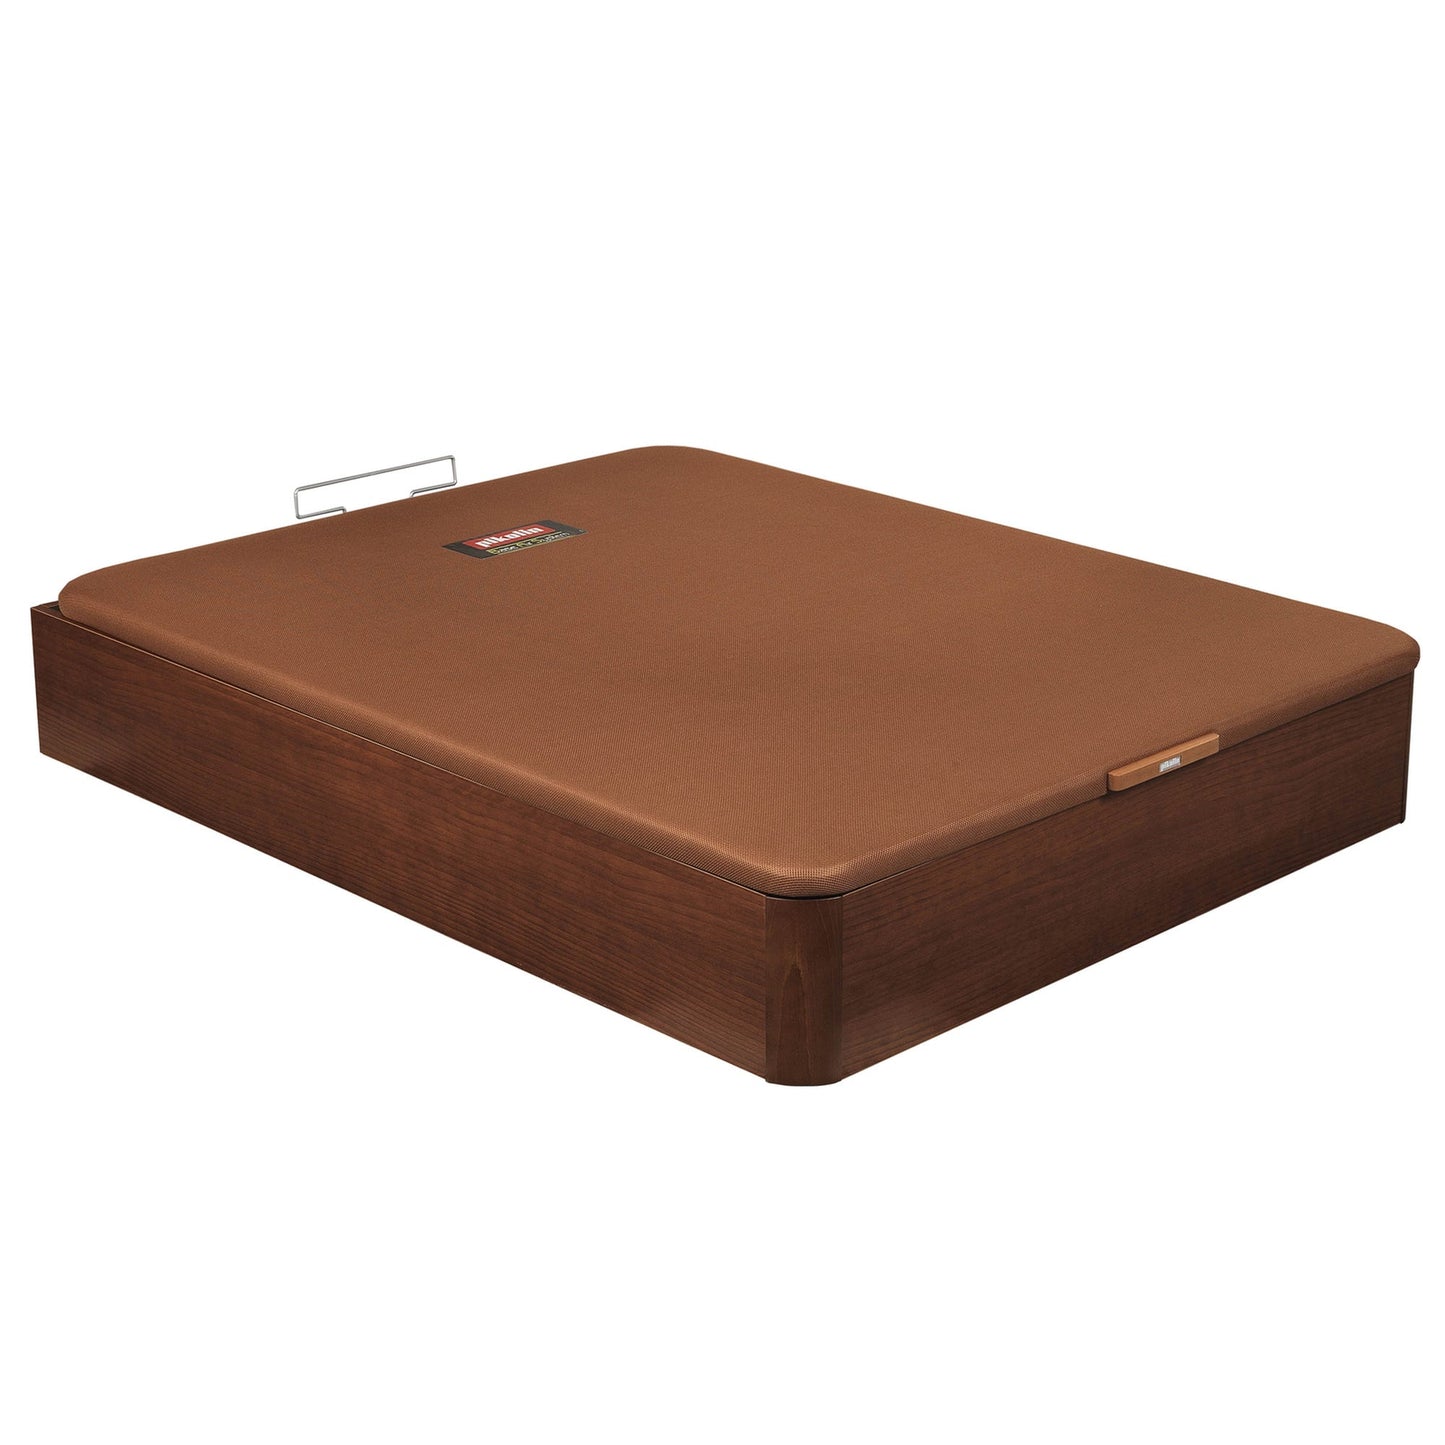 Canapé abatible de madera de color cerezo - NATURBOX CEREZO - 90x190